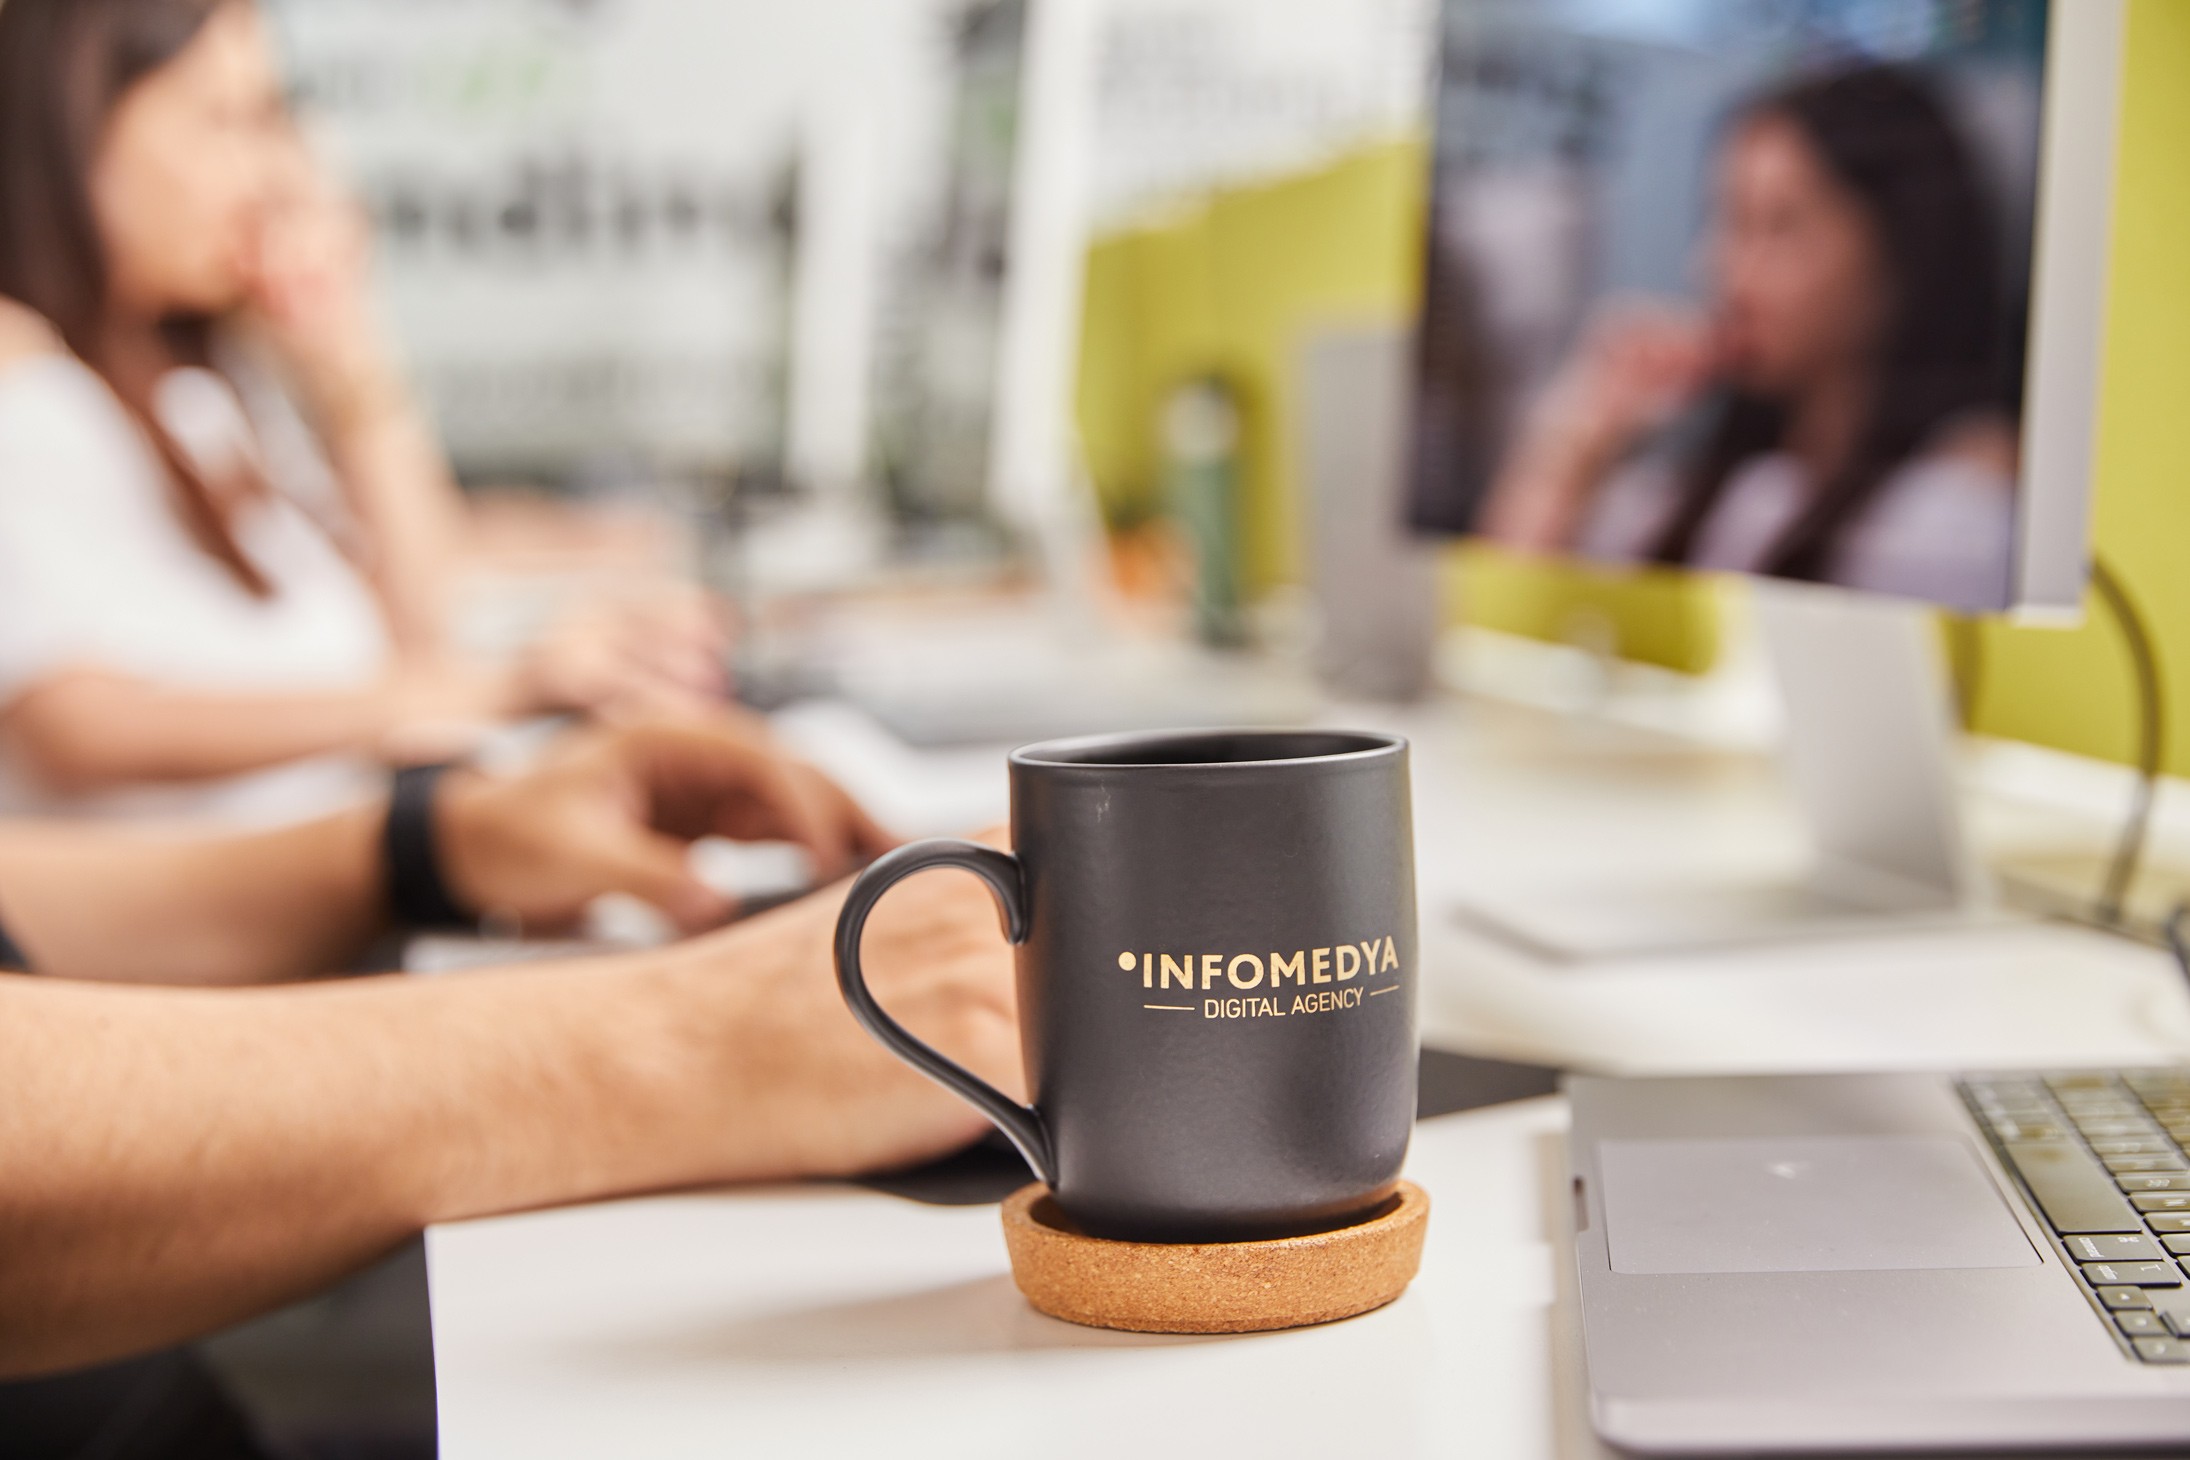 Infomedia Agency's coffee cup